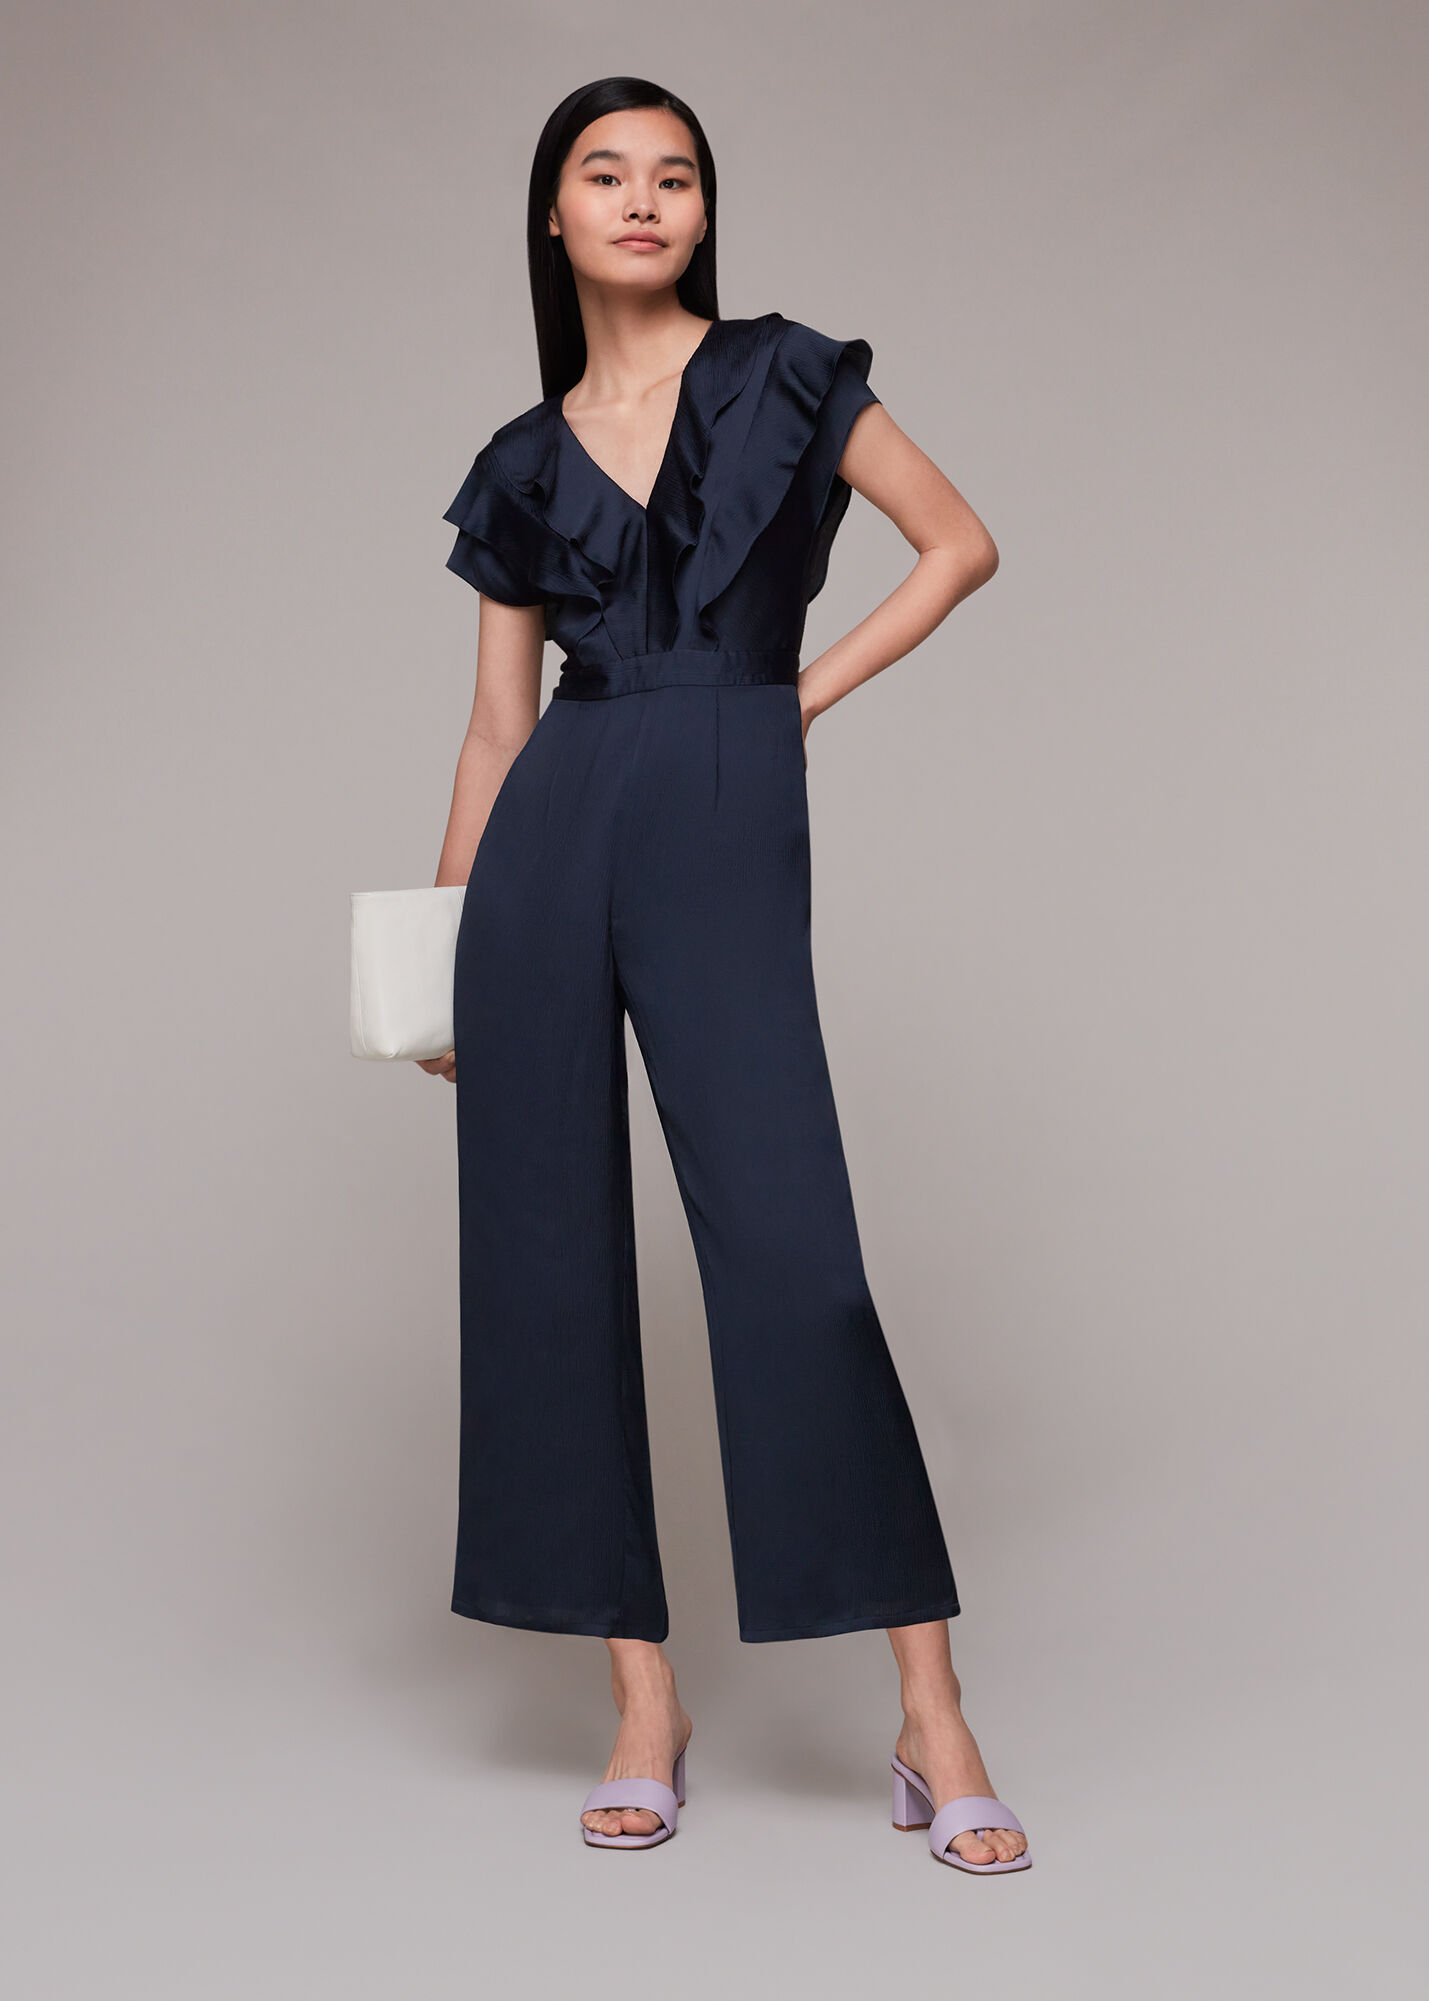 Victorian Blue Blazer Jumpsuit for Women's High End Fashion - B'Infinite